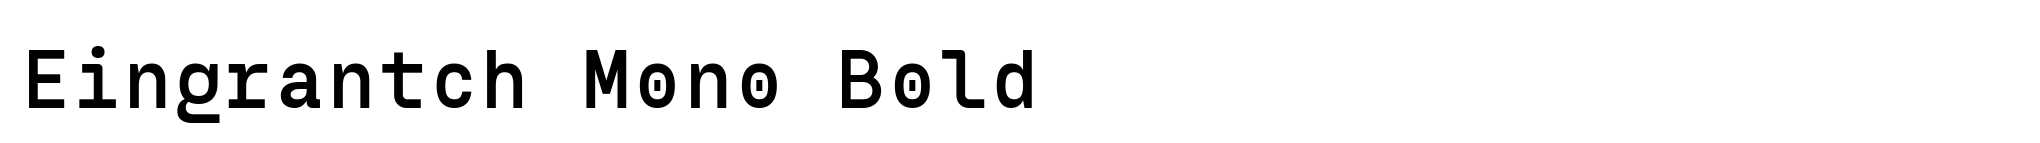 Eingrantch Mono Bold image